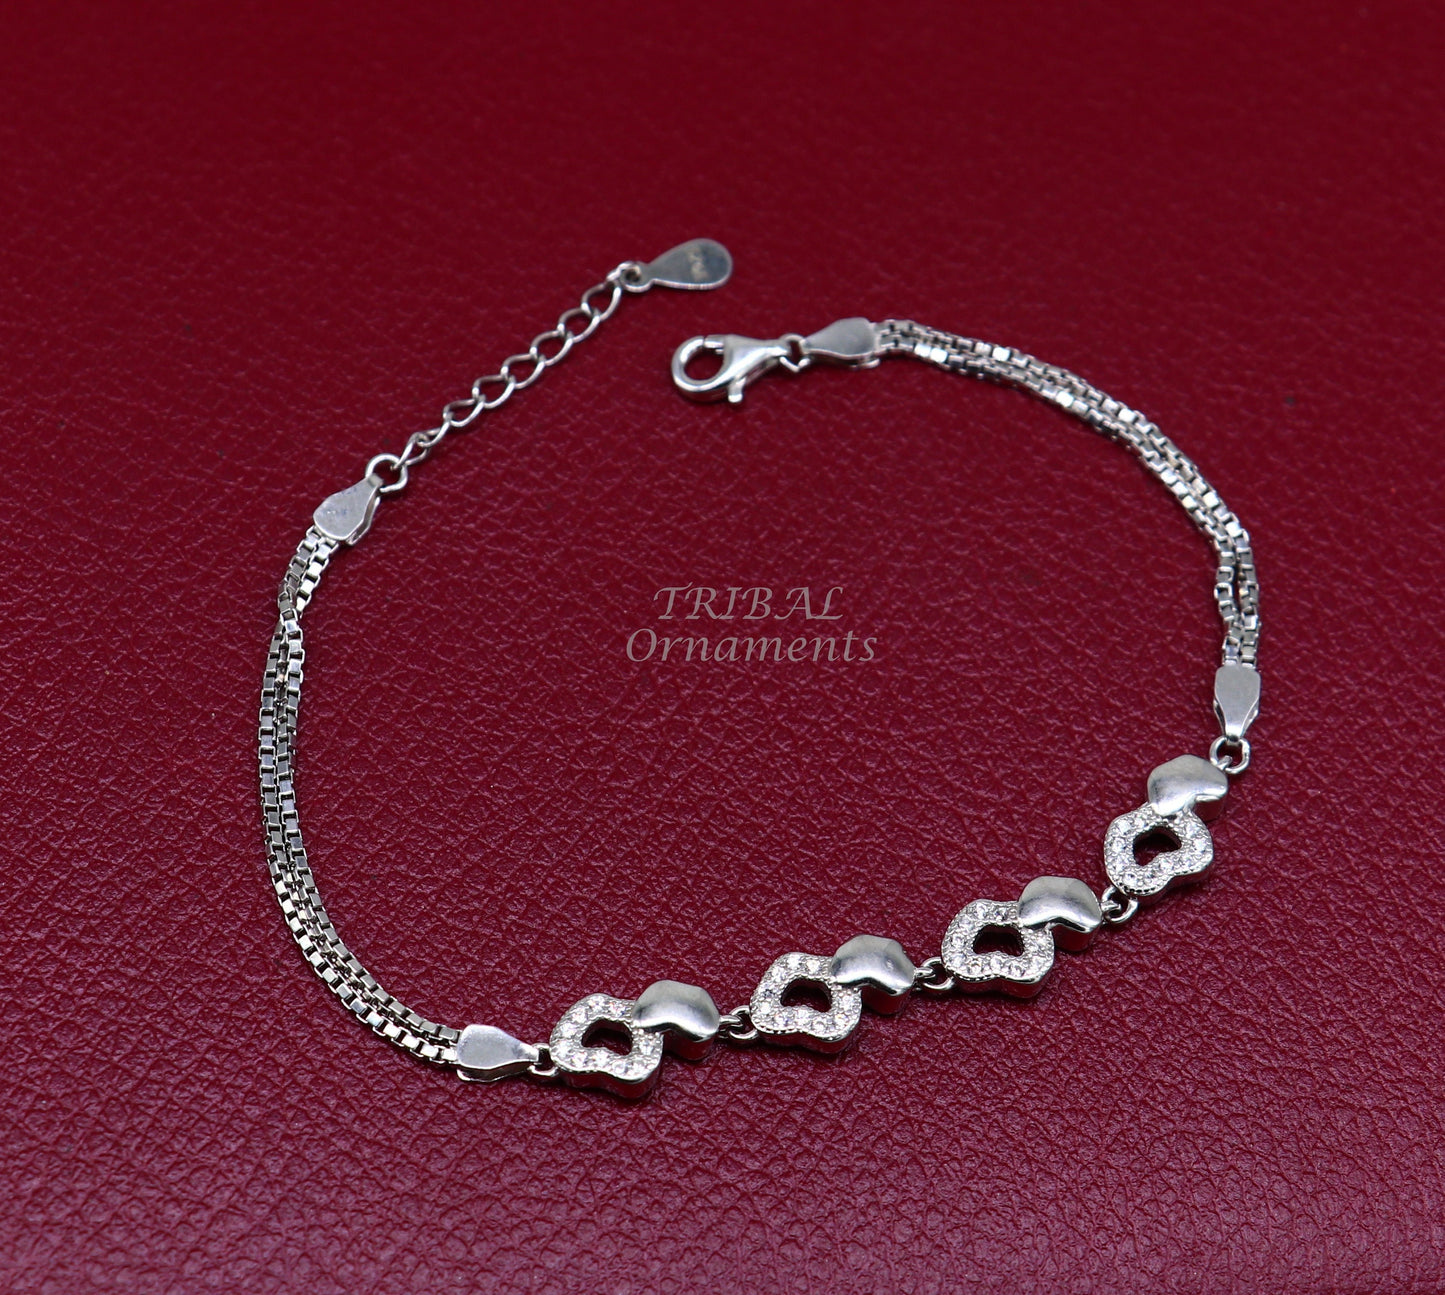 925 sterling silver handmade link chain Bracelet for girl's, Dainty Silver Bracelet, Chain Bracelet, Minimal Jewelry, Gift For Women sbr379 - TRIBAL ORNAMENTS